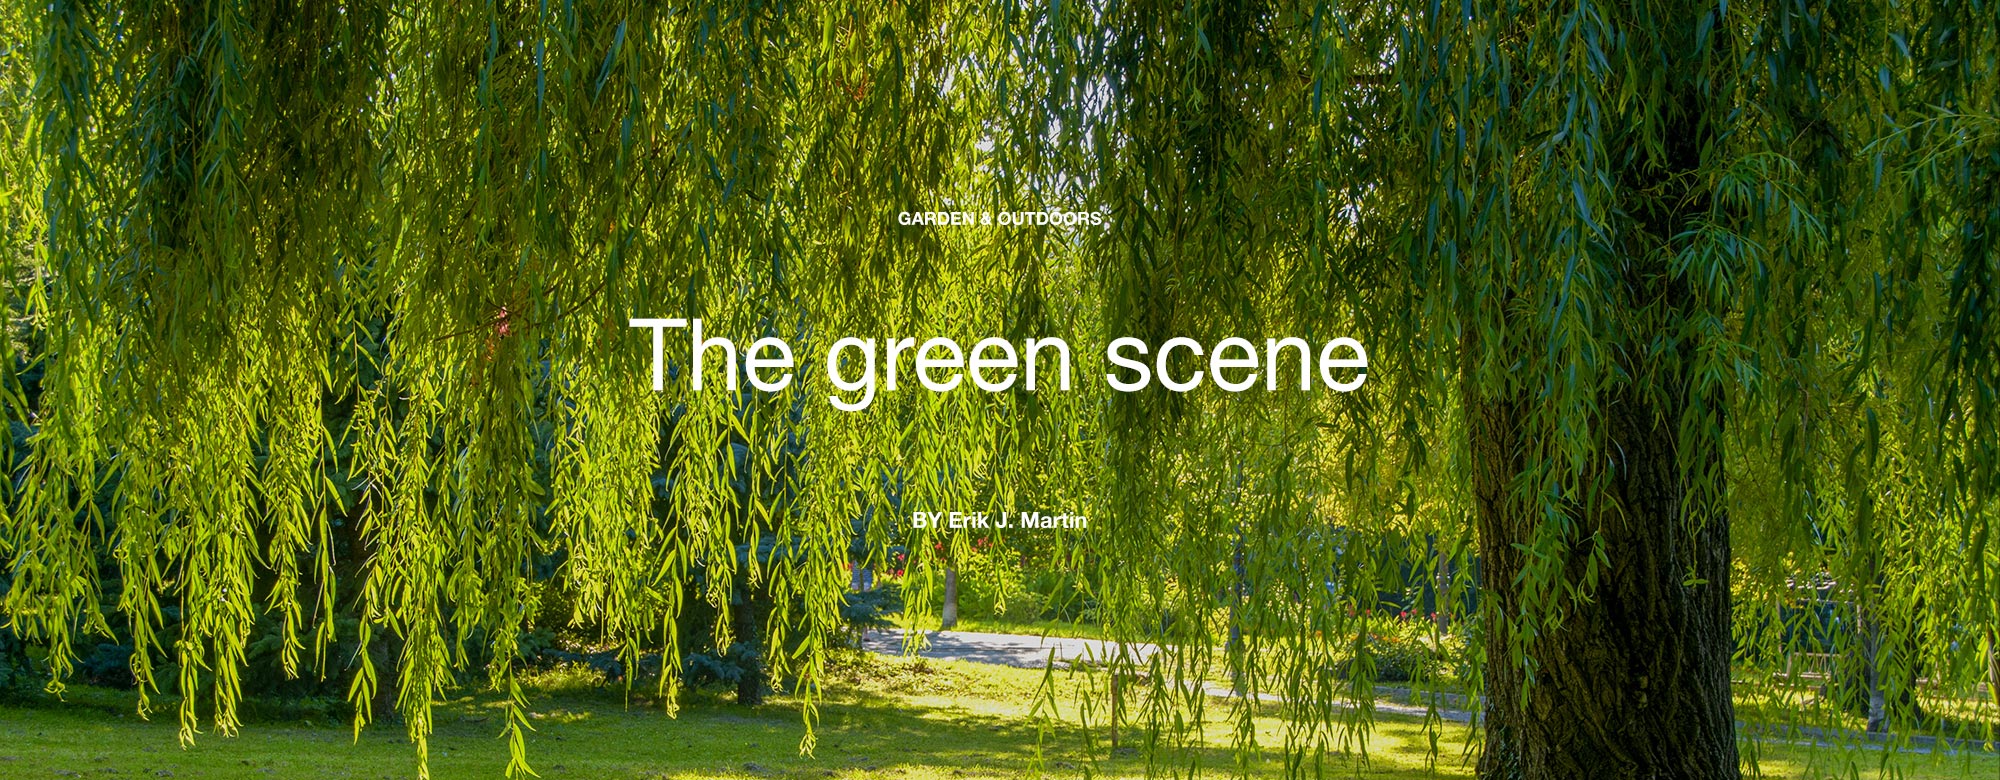 The green scene